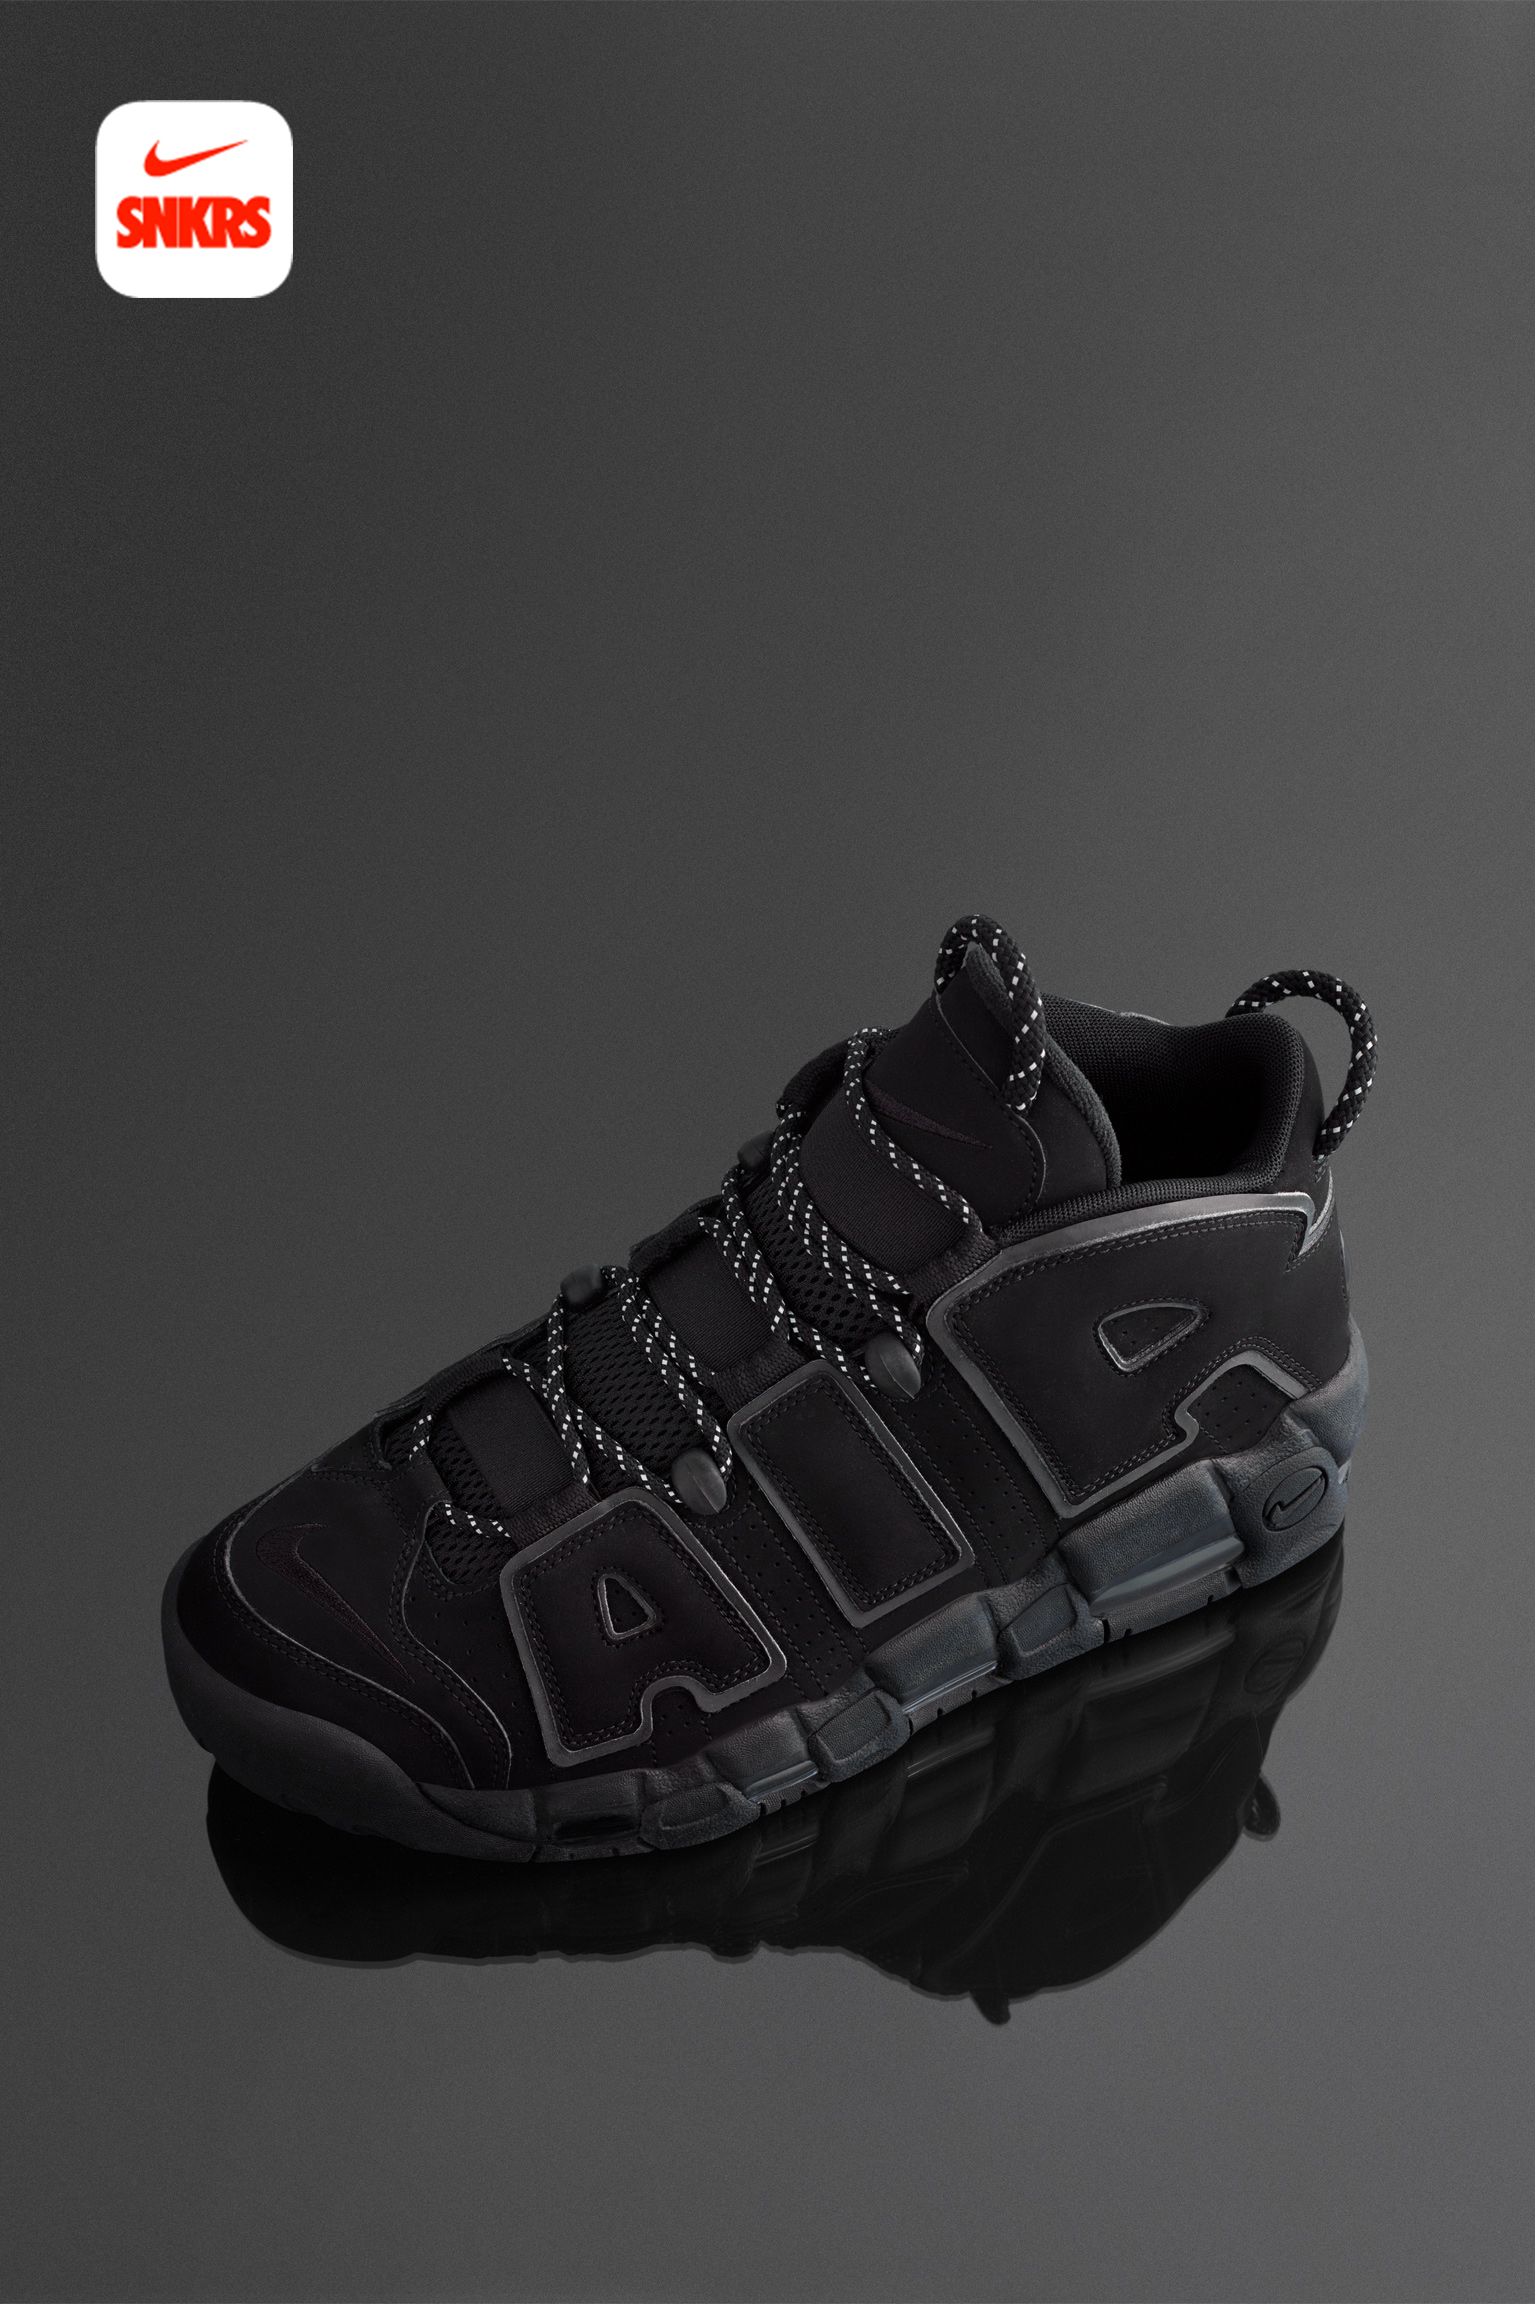 NIKE公式】ナイキ エア モア アップテンポ 'Triple Black' 2018 (414962-004 / モアテン). Nike SNKRS  JP